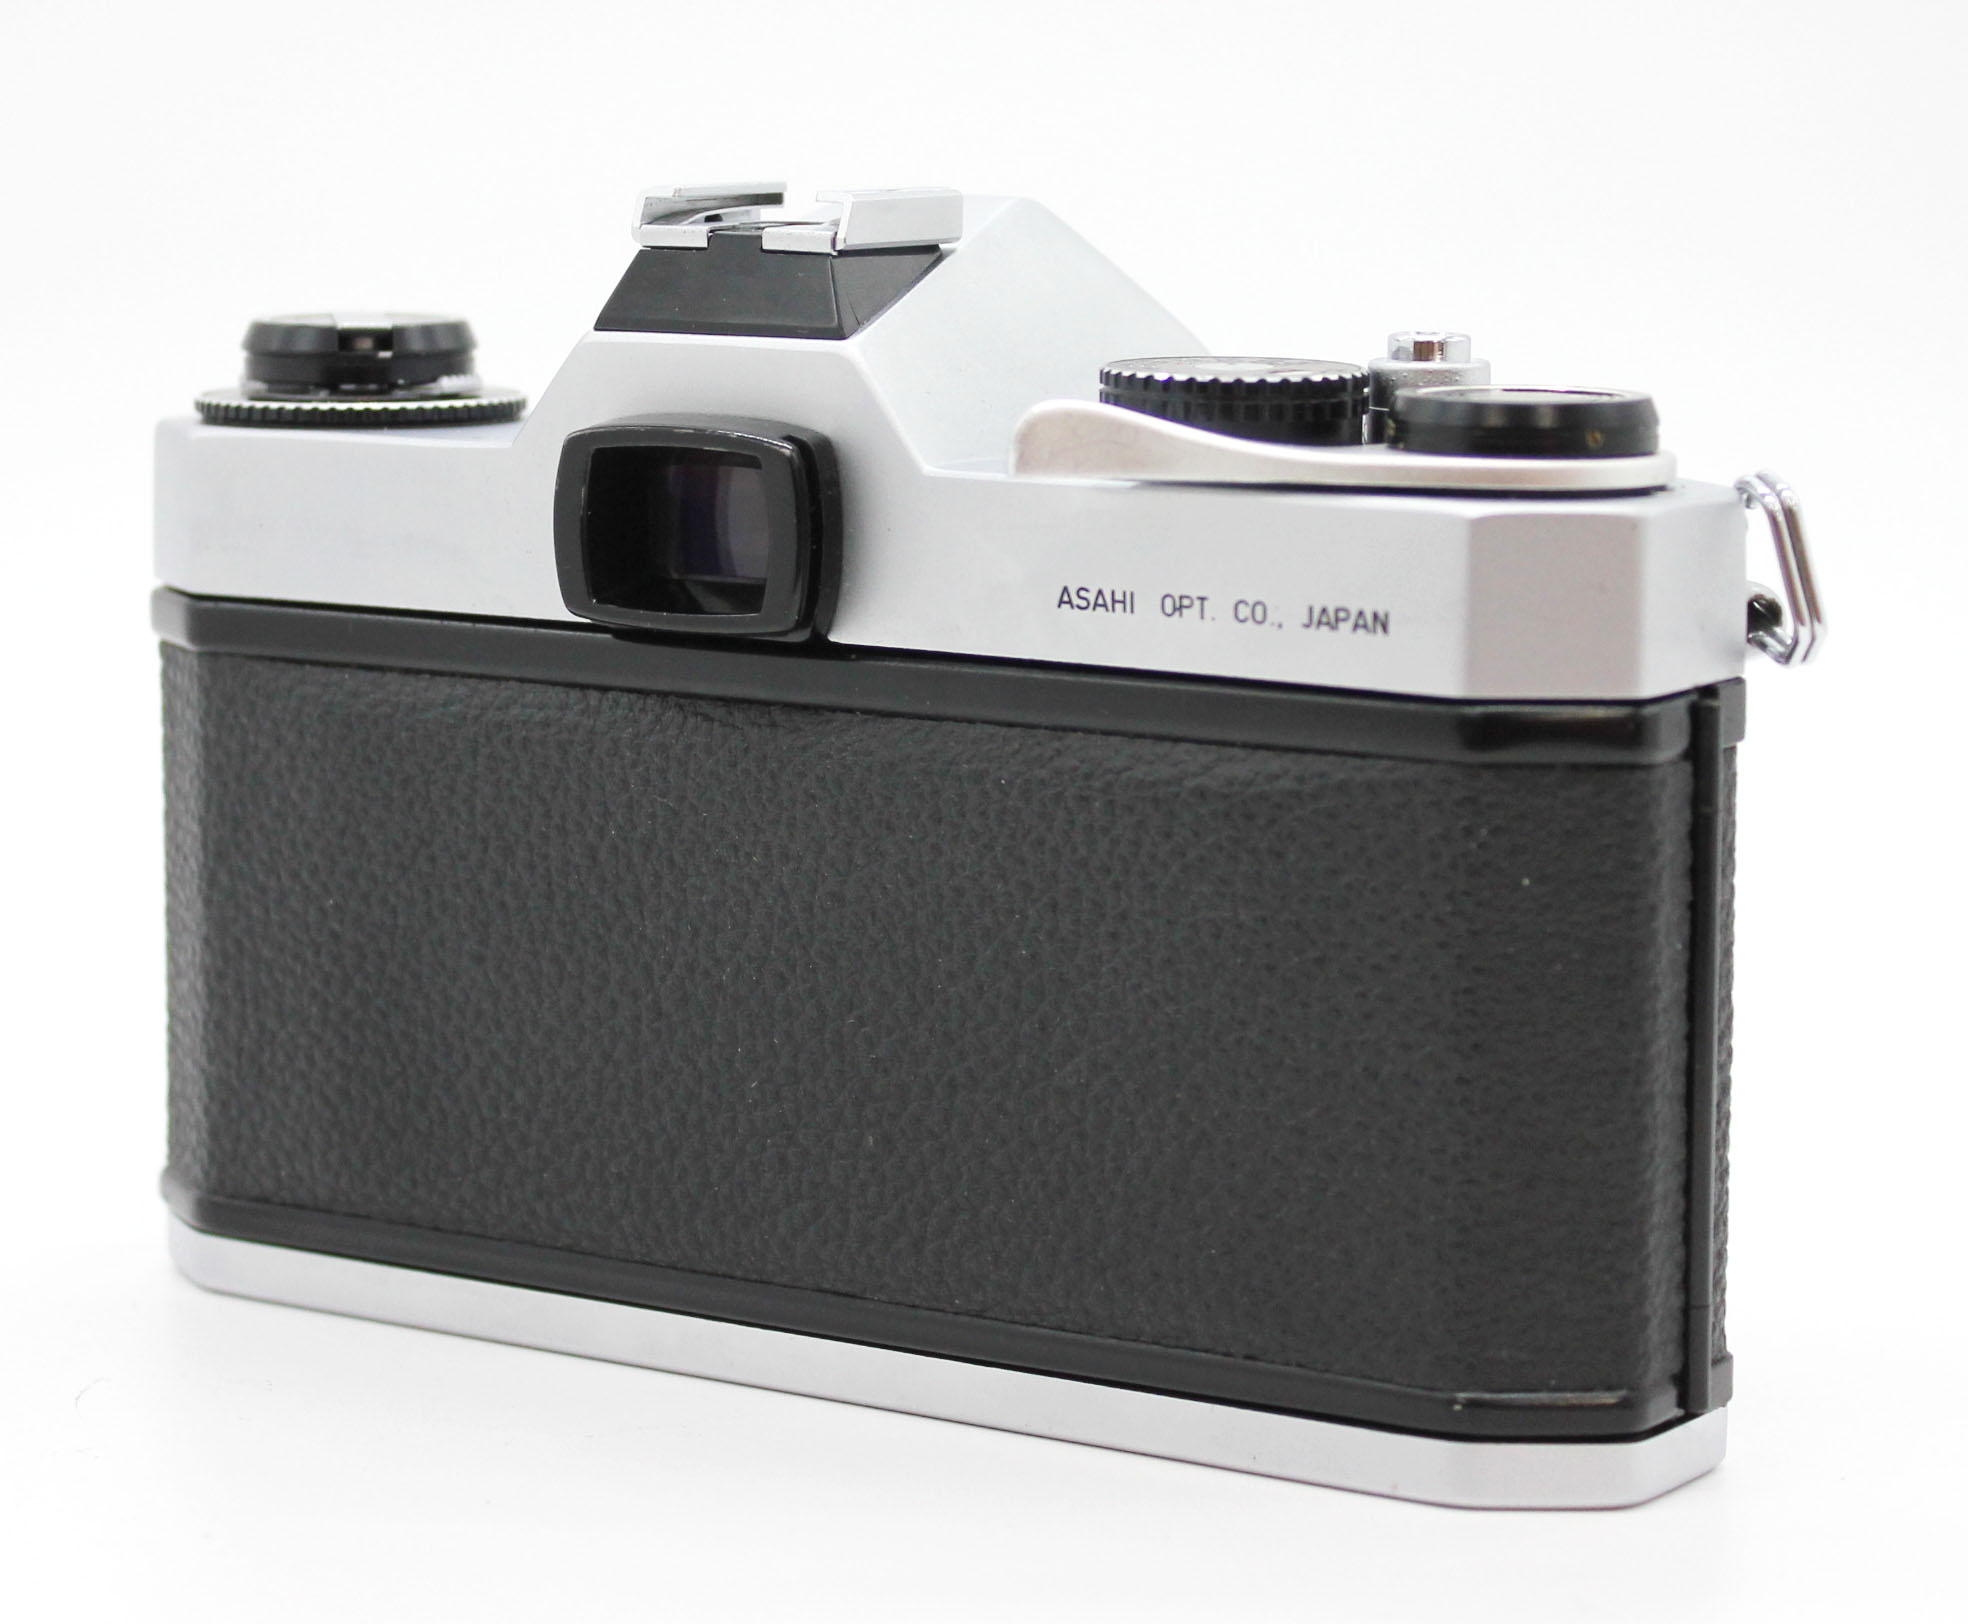 Asahi Pentax Spotmatic F SPF 35mm SLR Camera w/ SMC Takumar 55mm F/1.8 Lens from Japan Photo 4